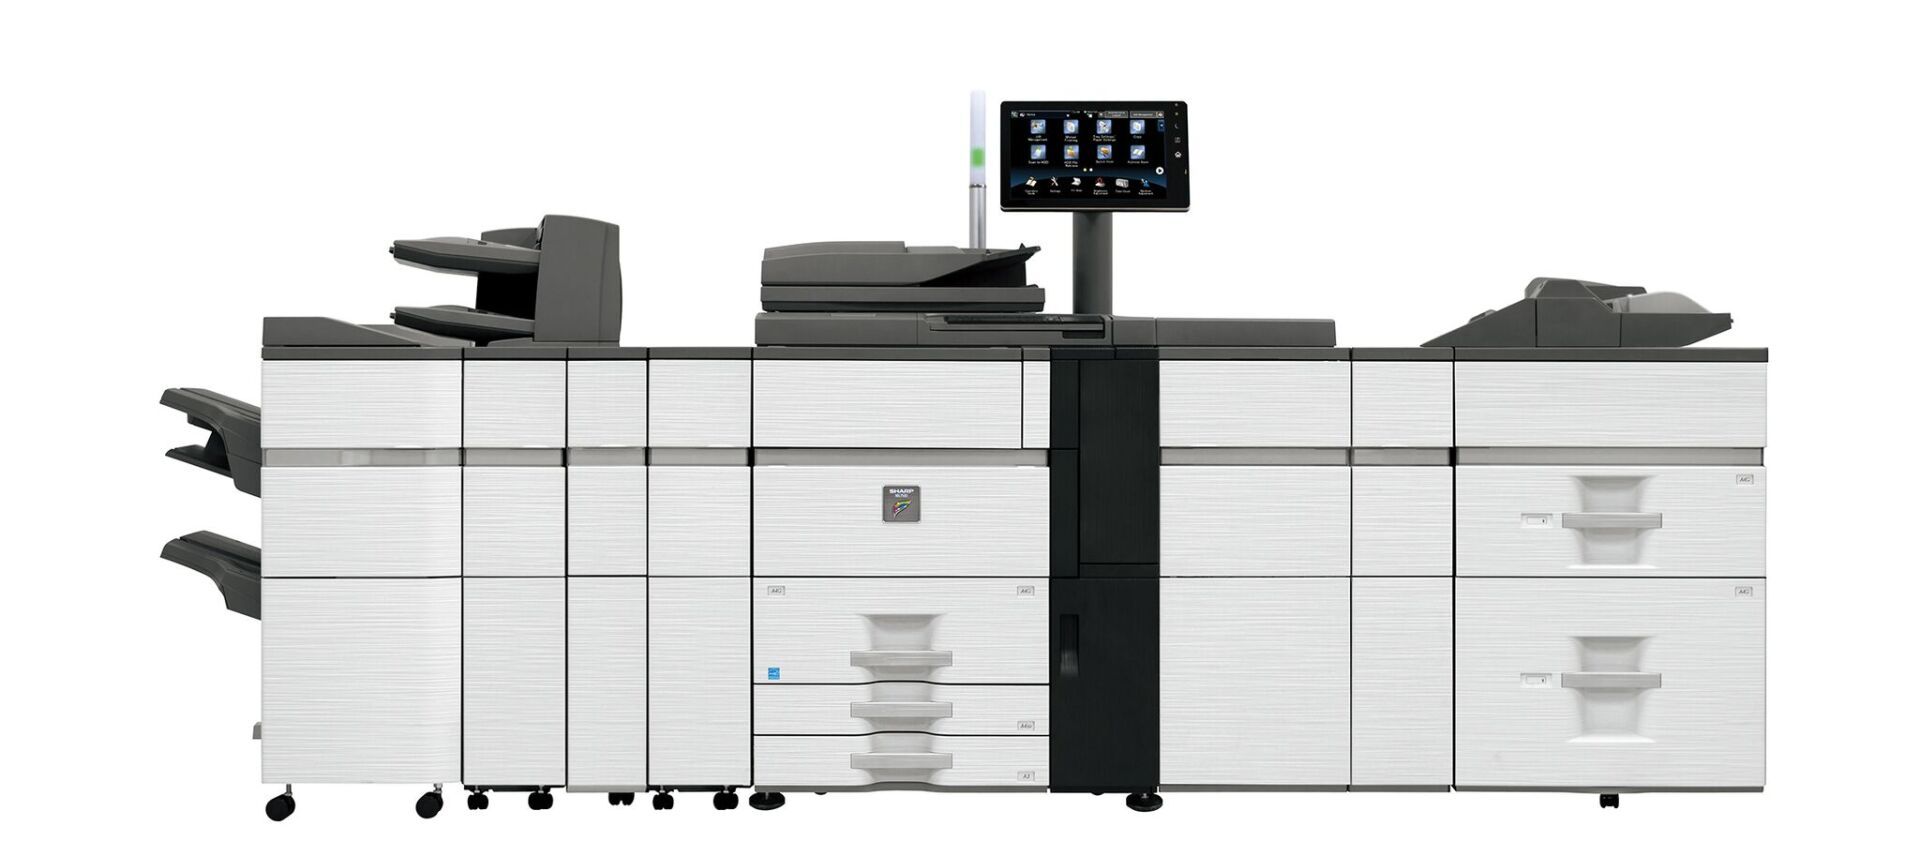 seartec Sharp MX-7500N colour printer